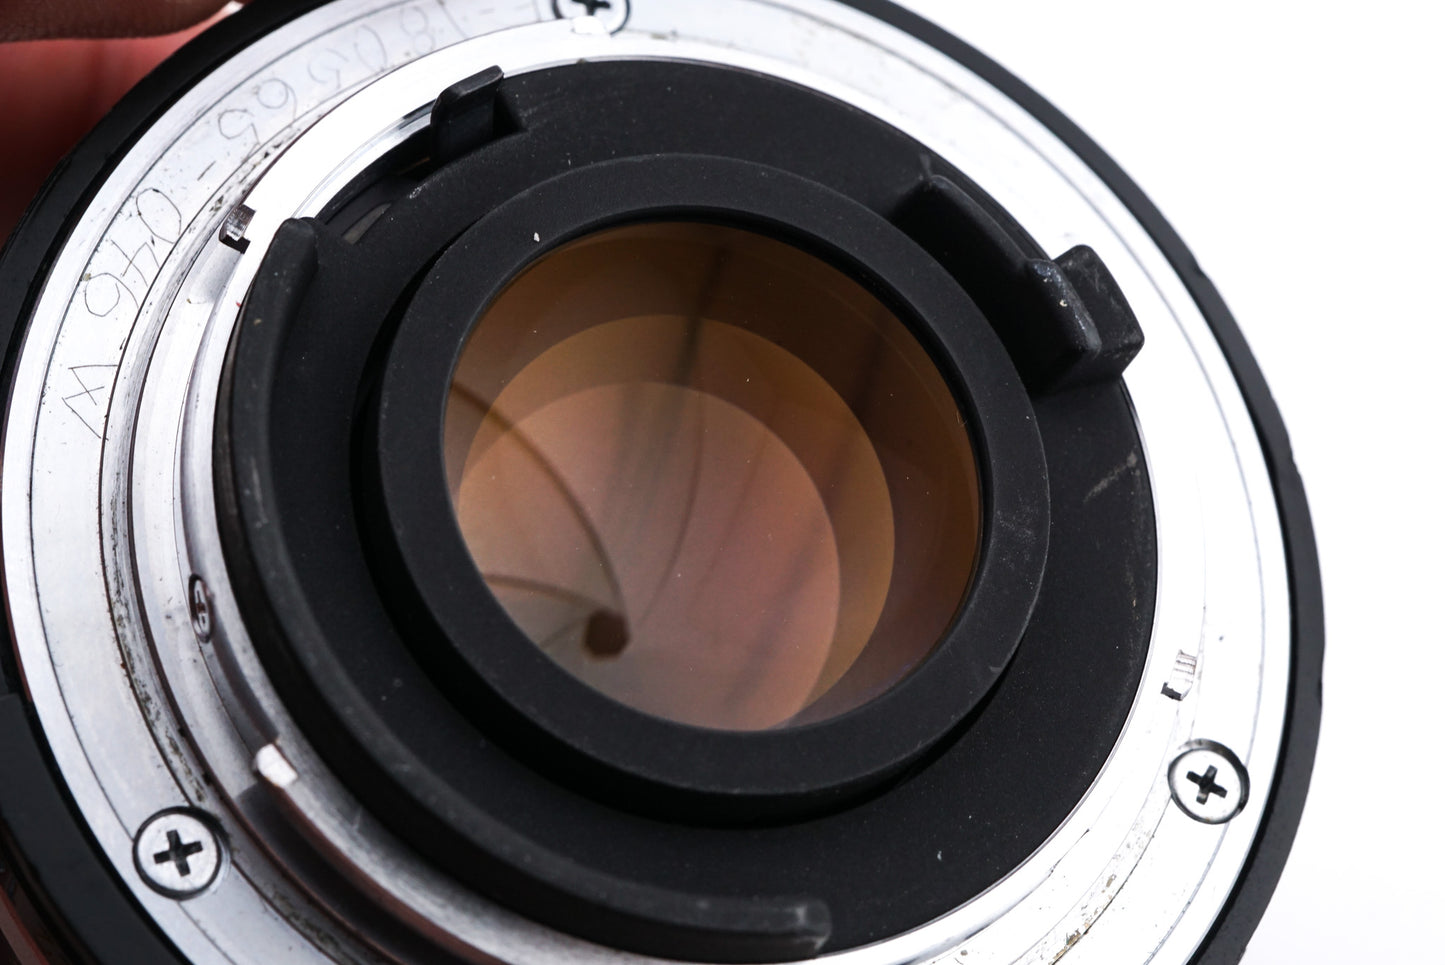 Nikon 50mm f1.8 Series E